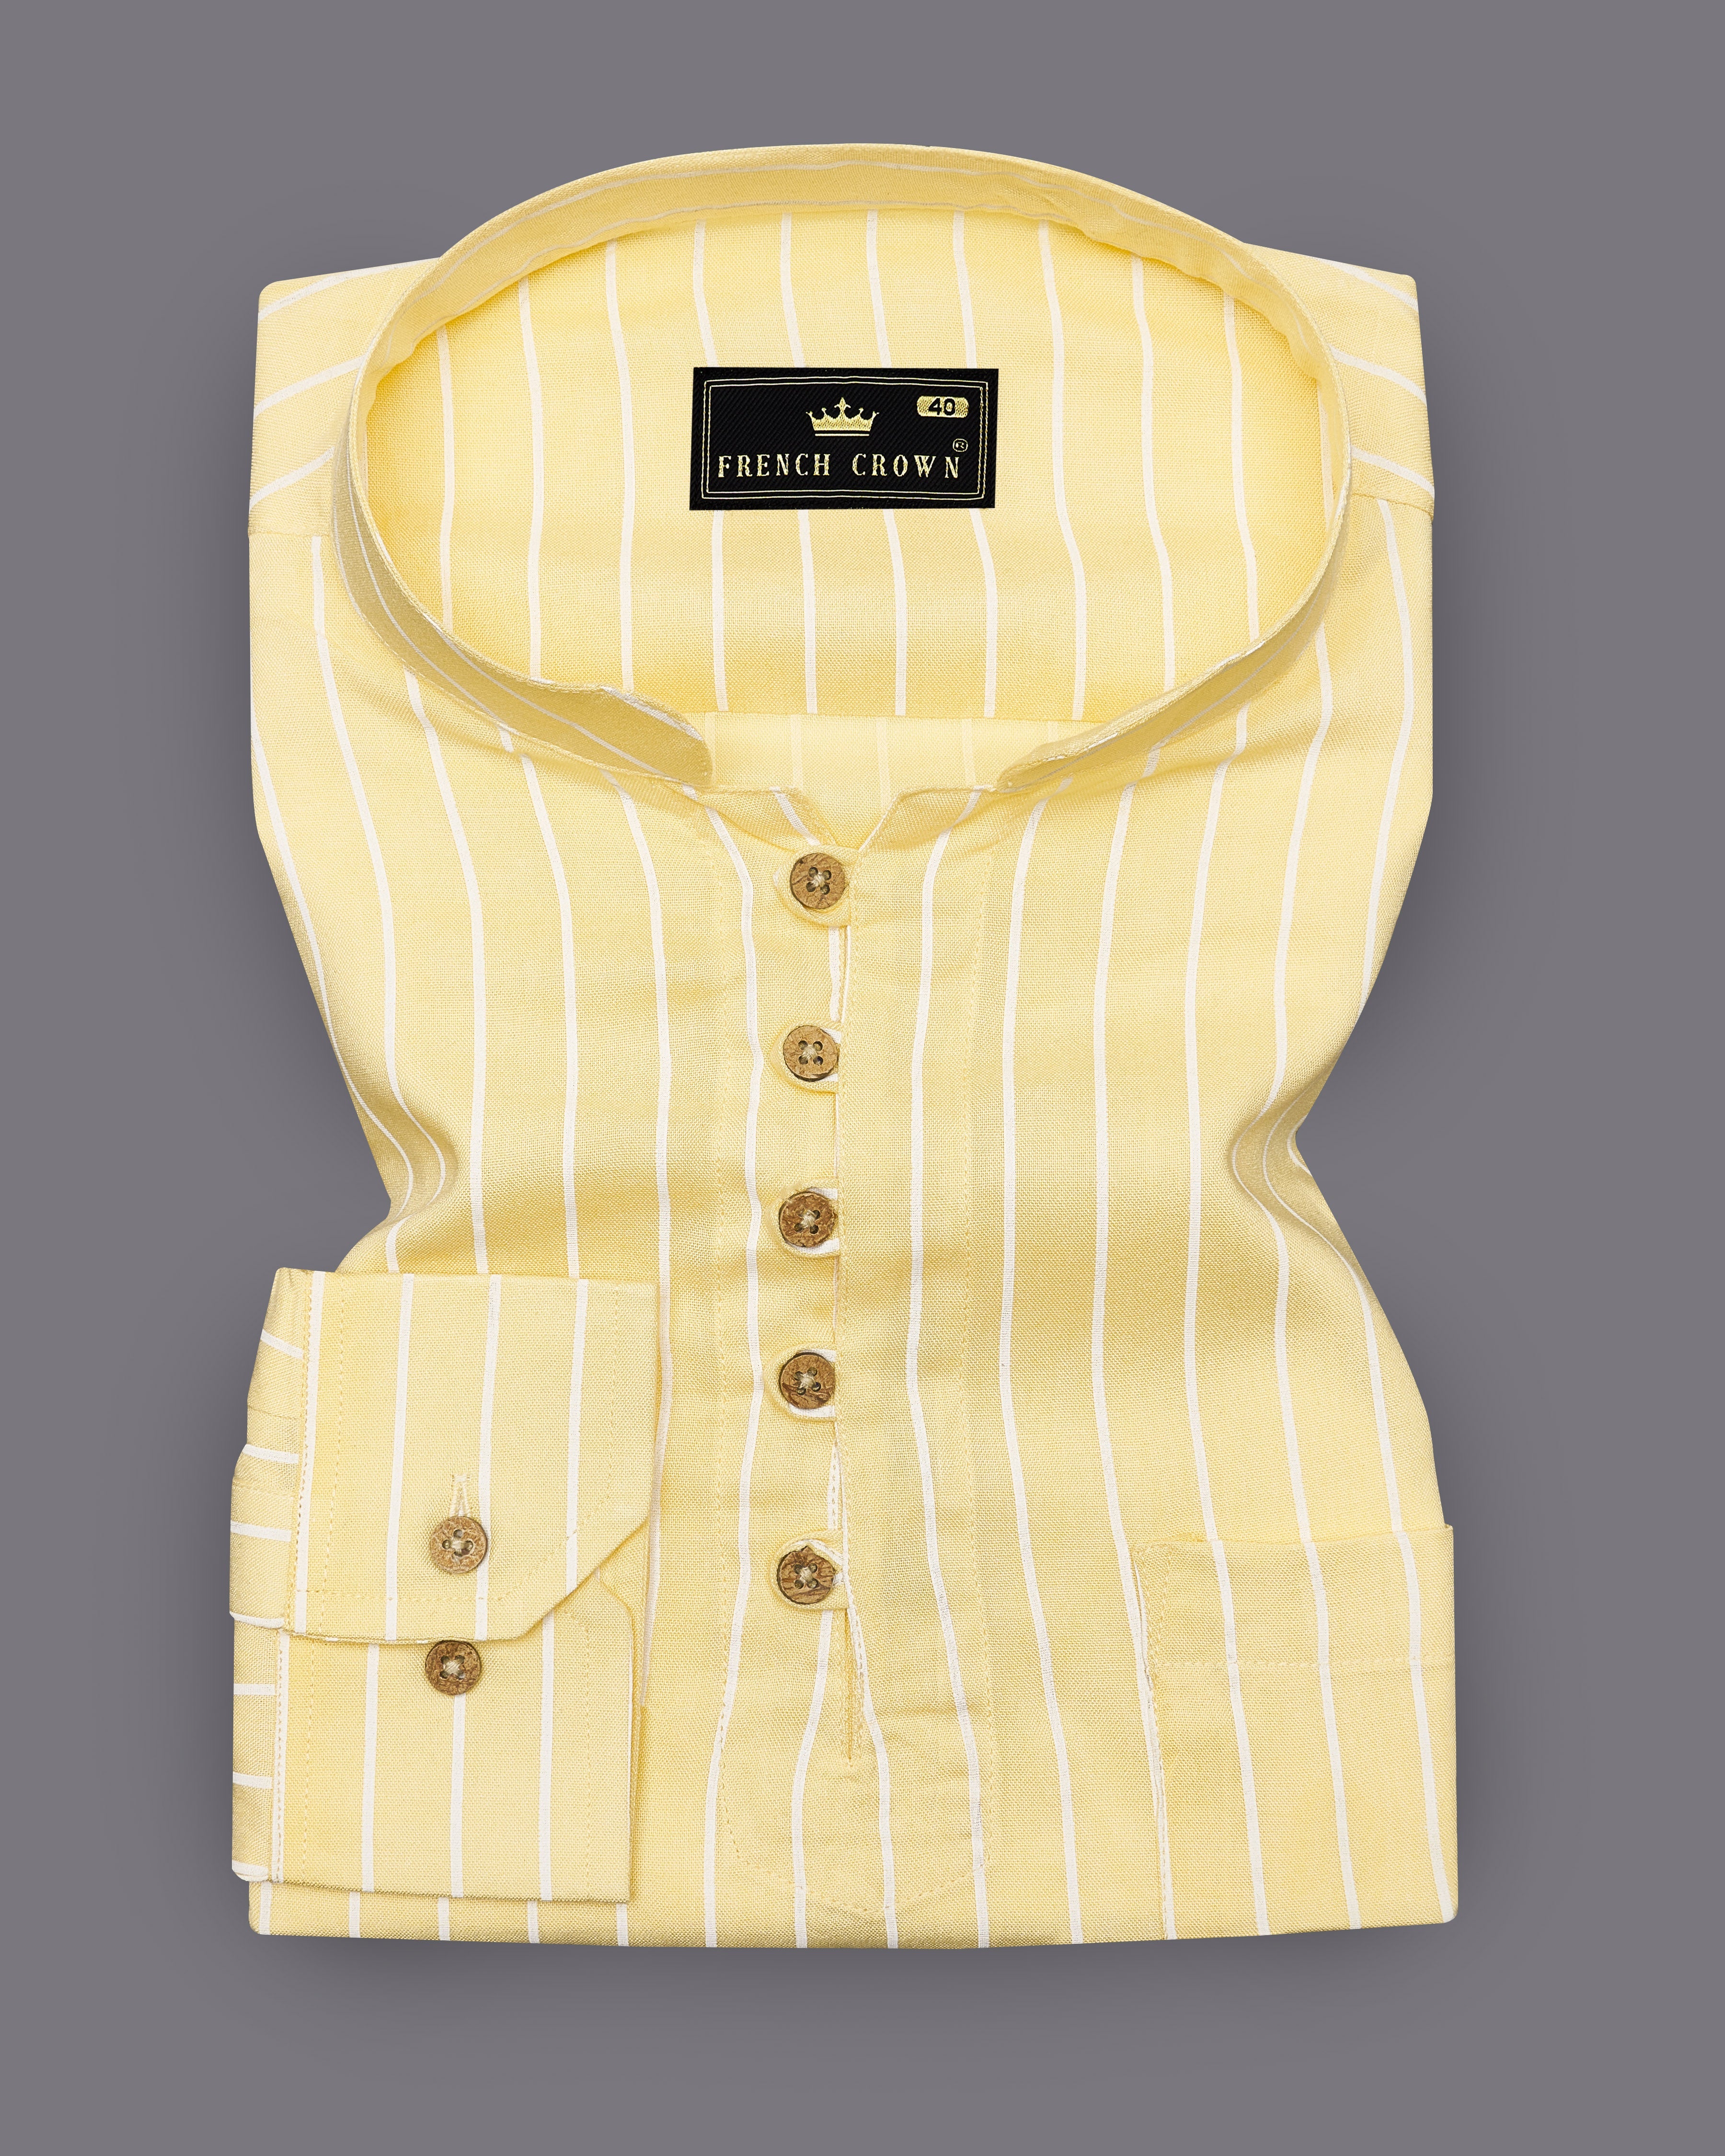 Hampton Yellow and White Striped Premium Cotton Kurta Shirt 9072-KS-38, 9072-KS-H-38, 9072-KS-39, 9072-KS-H-39, 9072-KS-40, 9072-KS-H-40, 9072-KS-42, 9072-KS-H-42, 9072-KS-44, 9072-KS-H-44, 9072-KS-46, 9072-KS-H-46, 9072-KS-48, 9072-KS-H-48, 9072-KS-50, 9072-KS-H-50, 9072-KS-52, 9072-KS-H-52